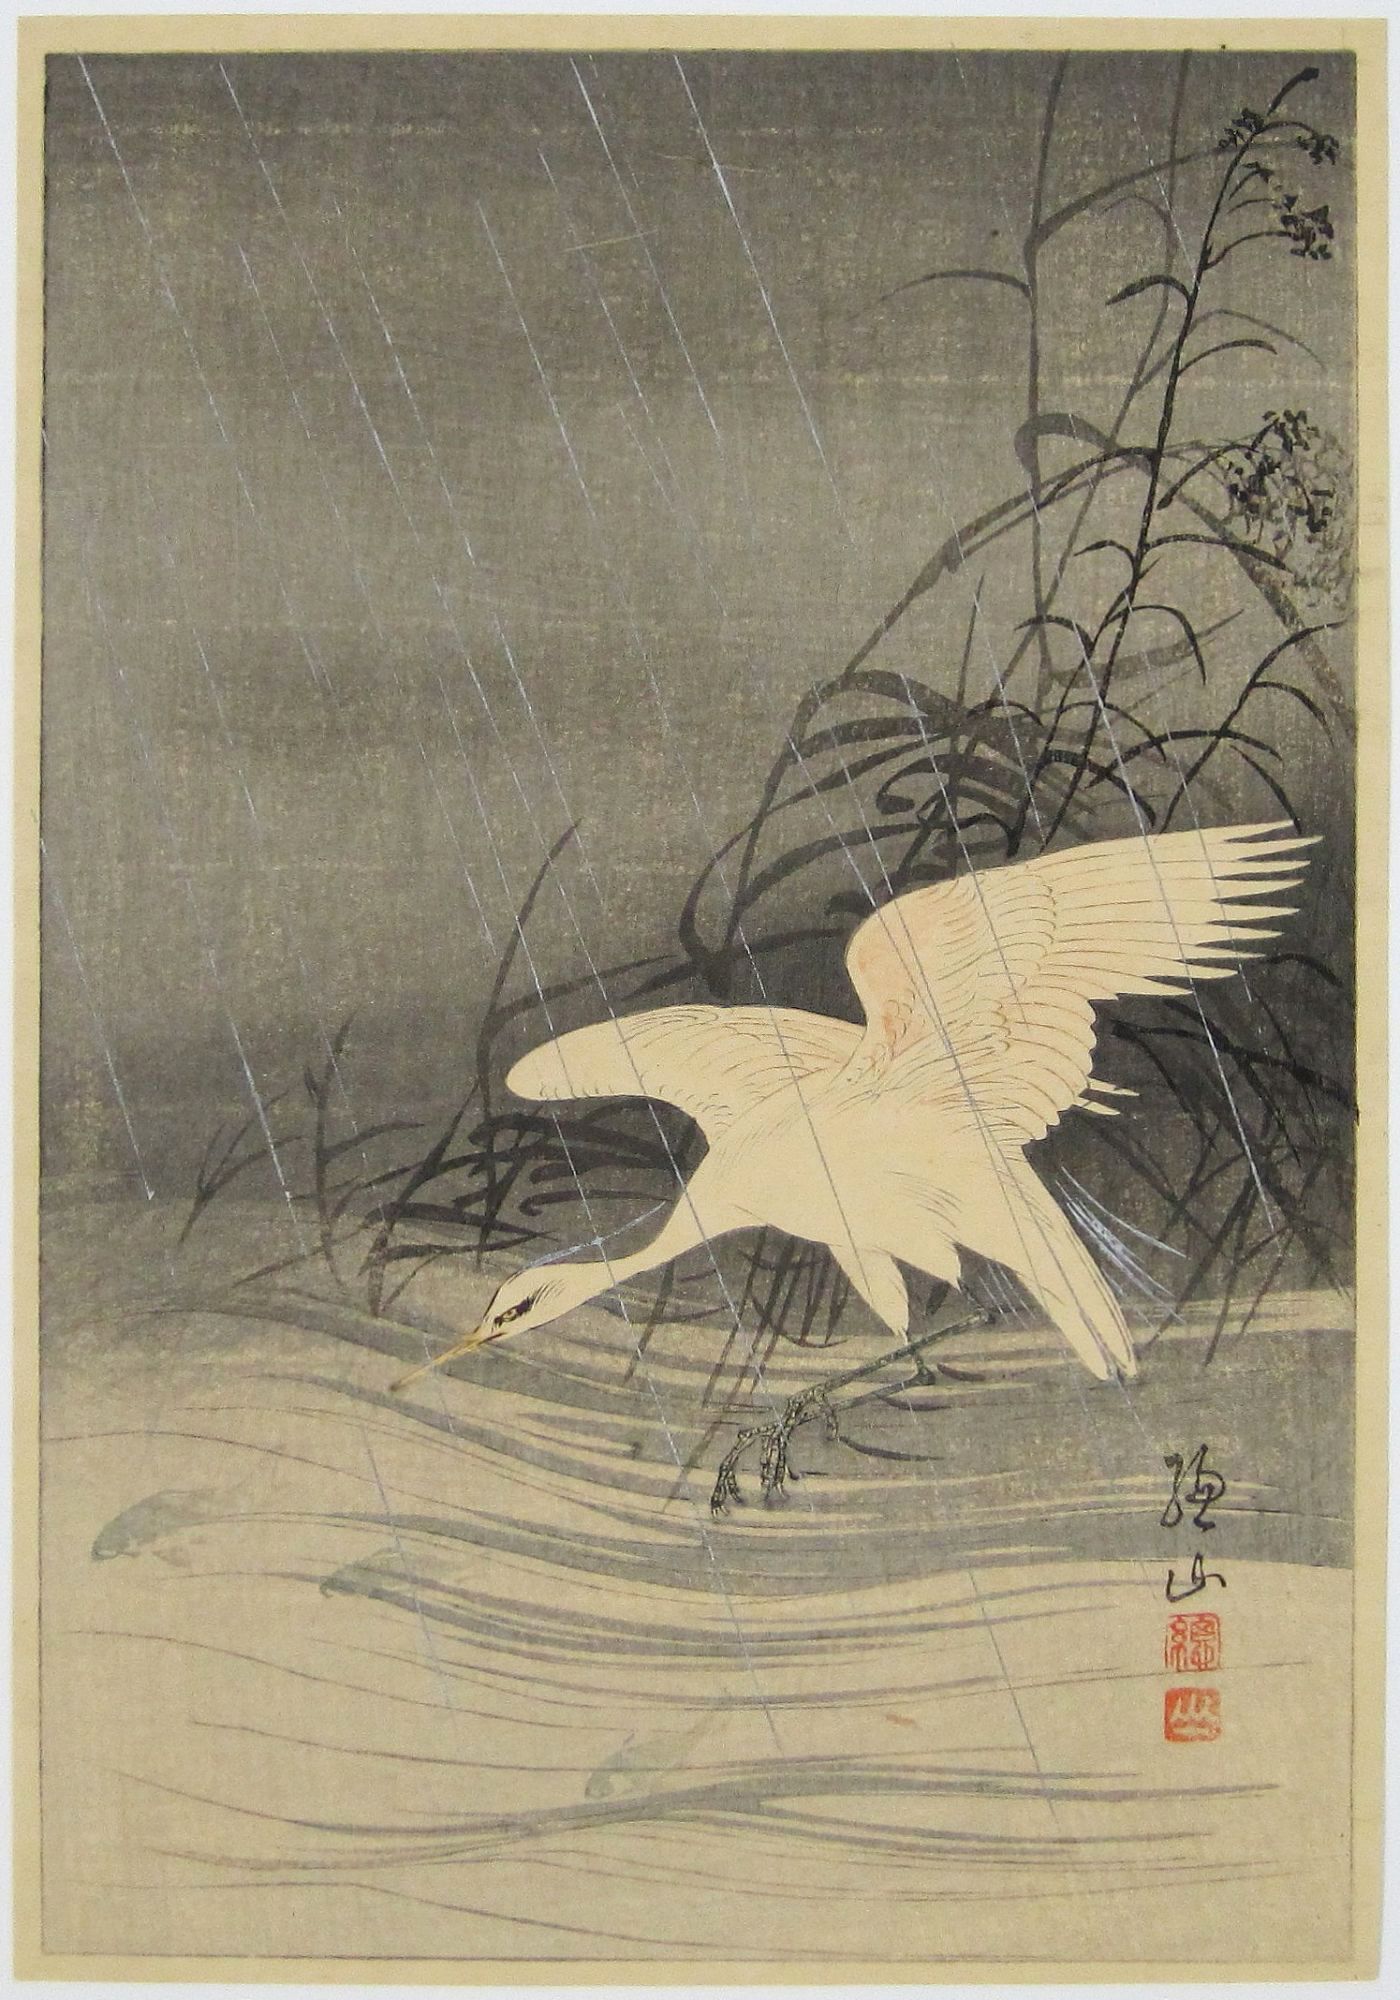 Heron Chasing Fish in the Rain. c.1919-1926